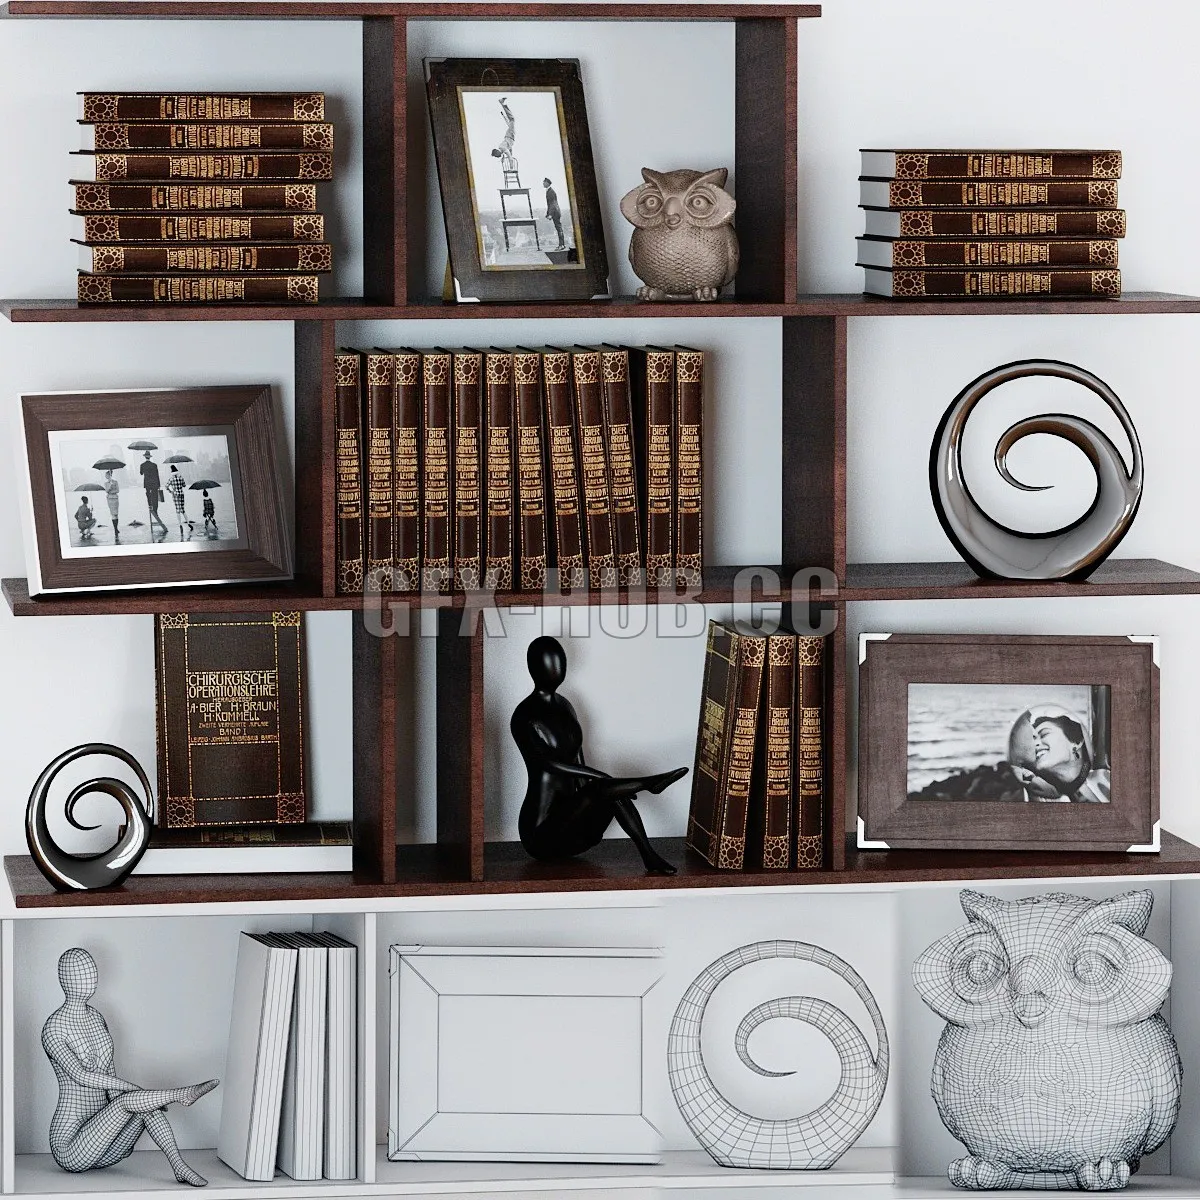 DECORATION – Decorative set with an owl